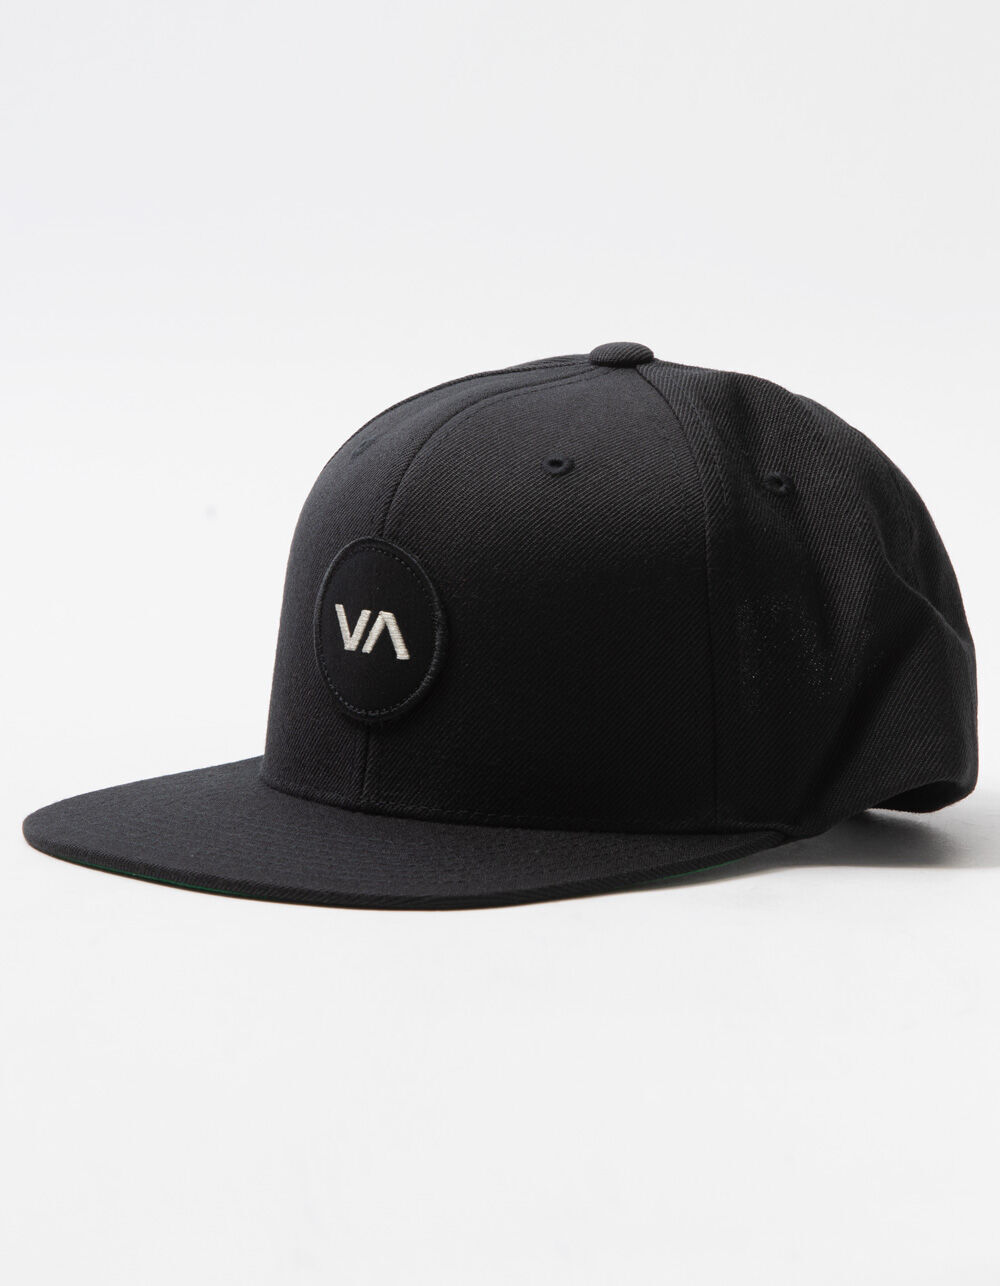 RVCA Va Patch Snapback Hat